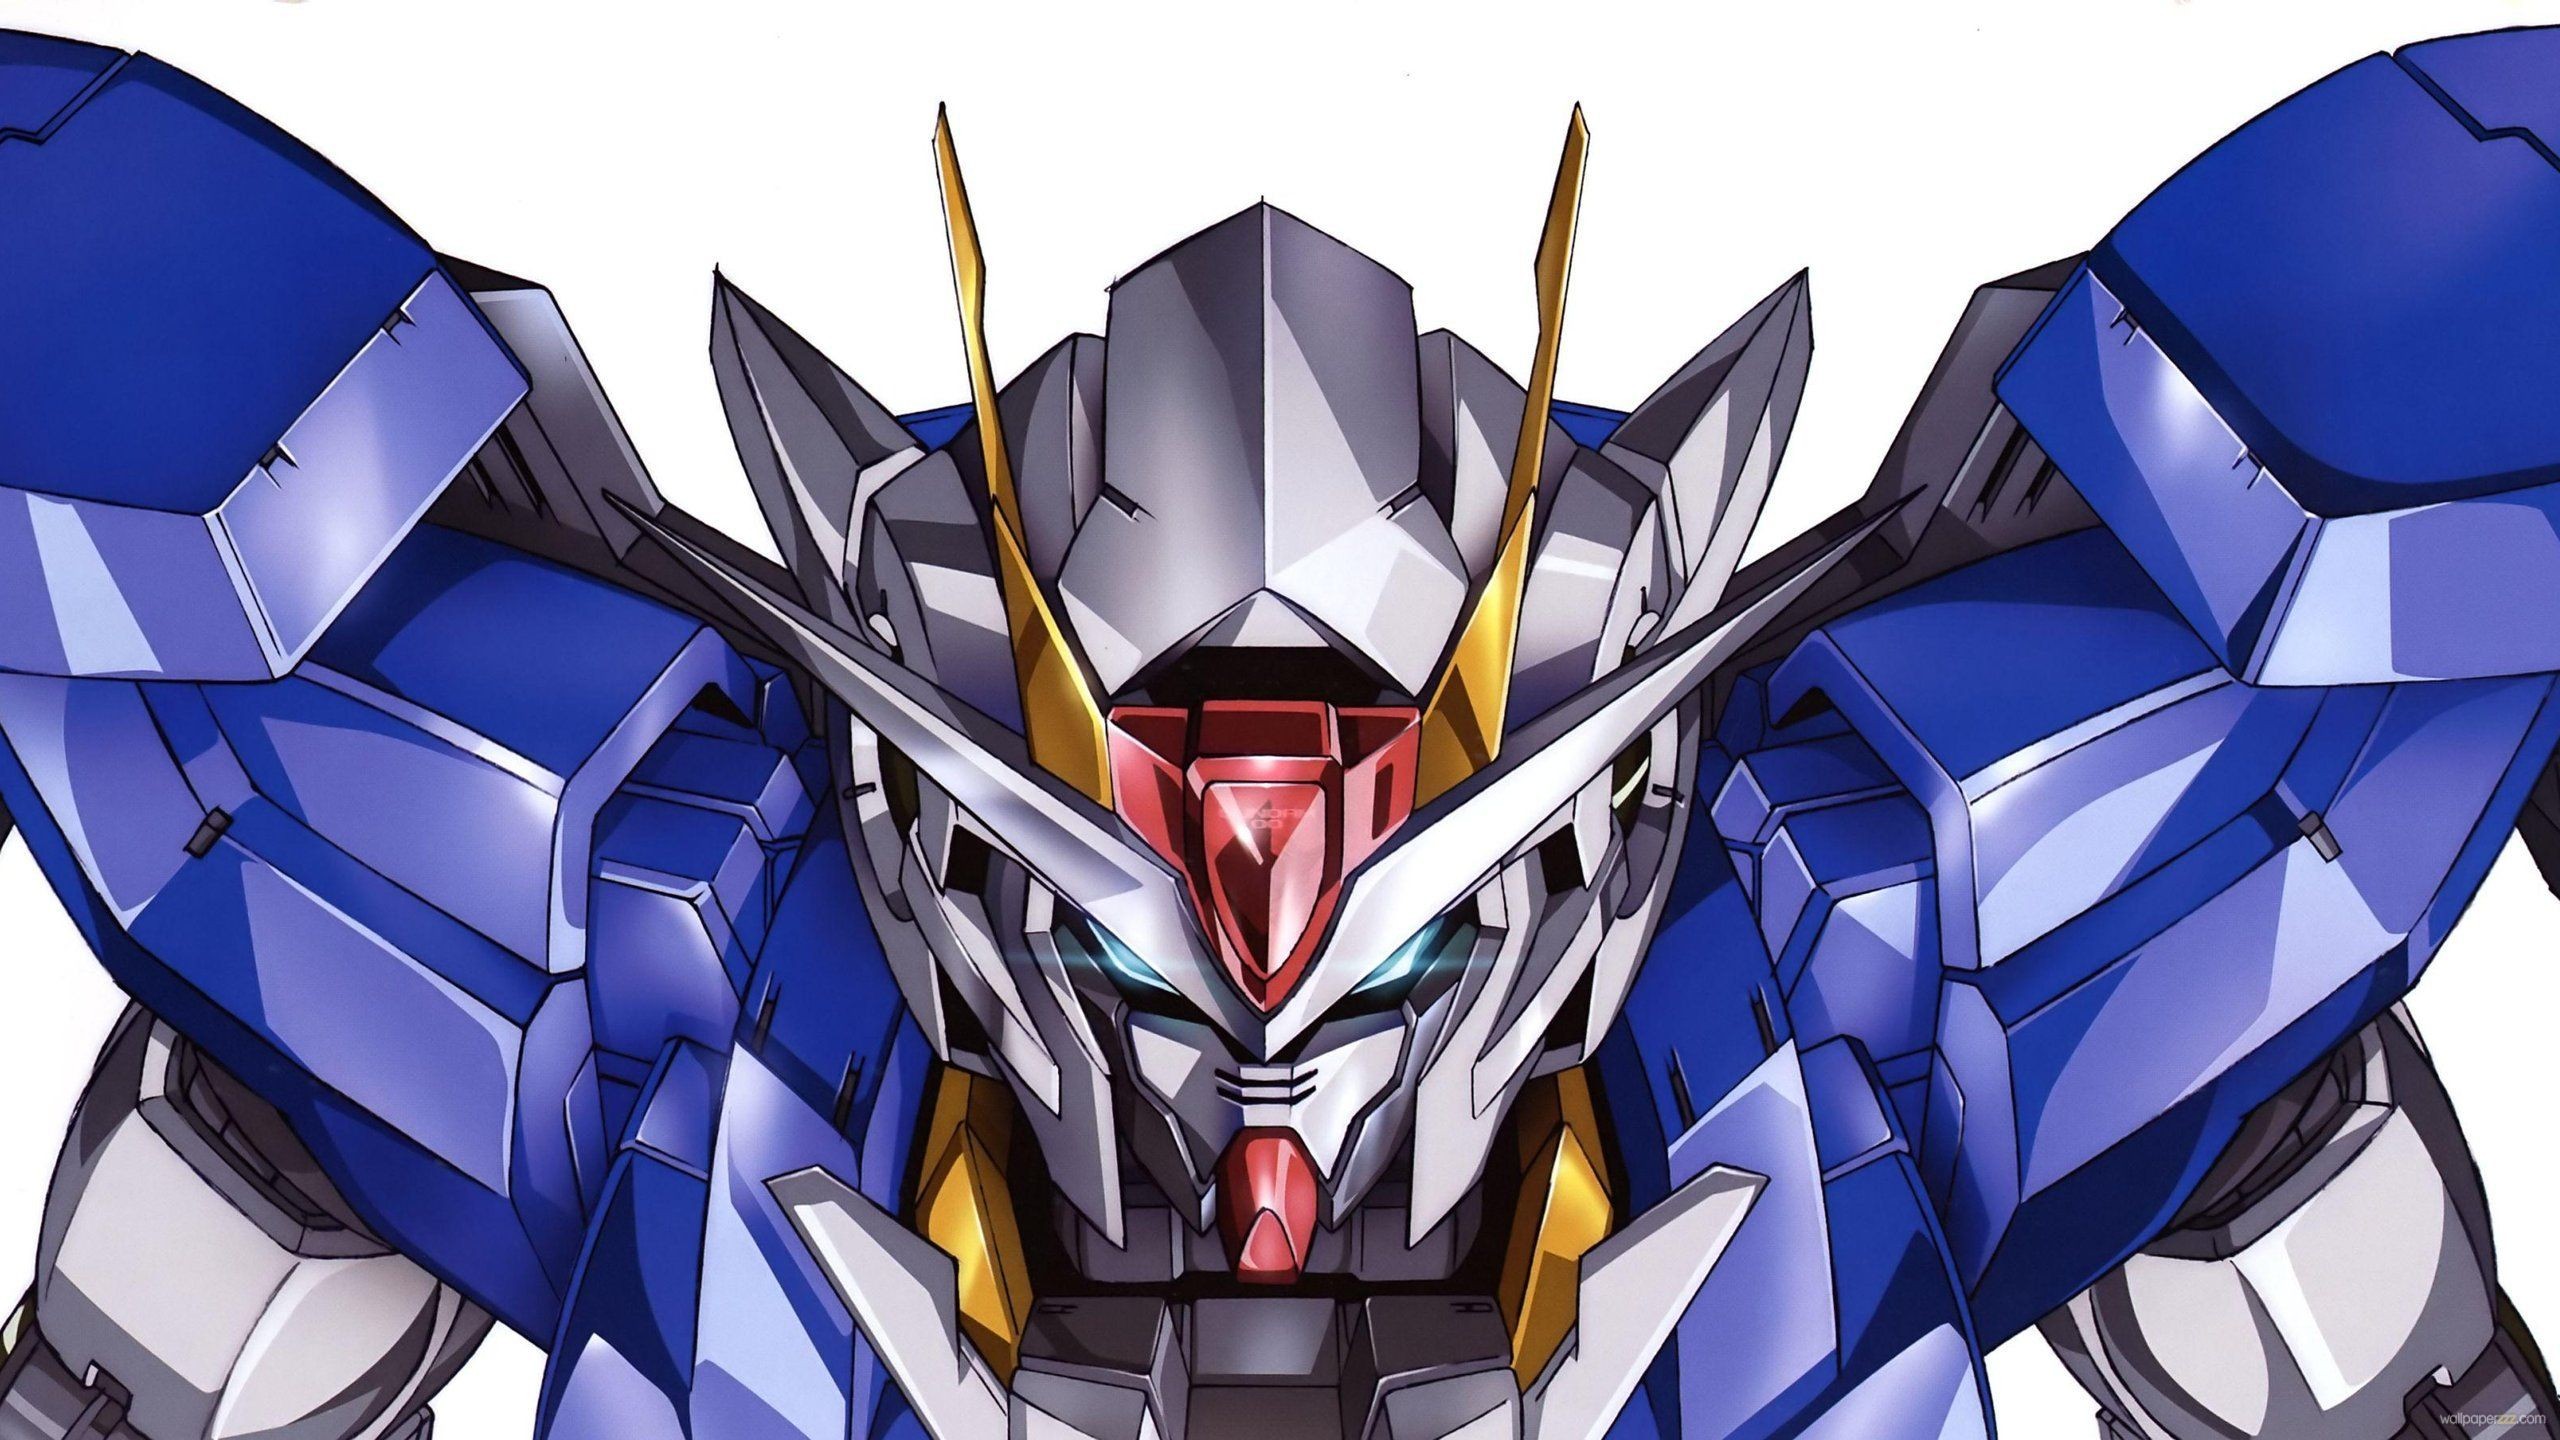  Gundam  Barbatos wallpaper    Download free cool full HD  